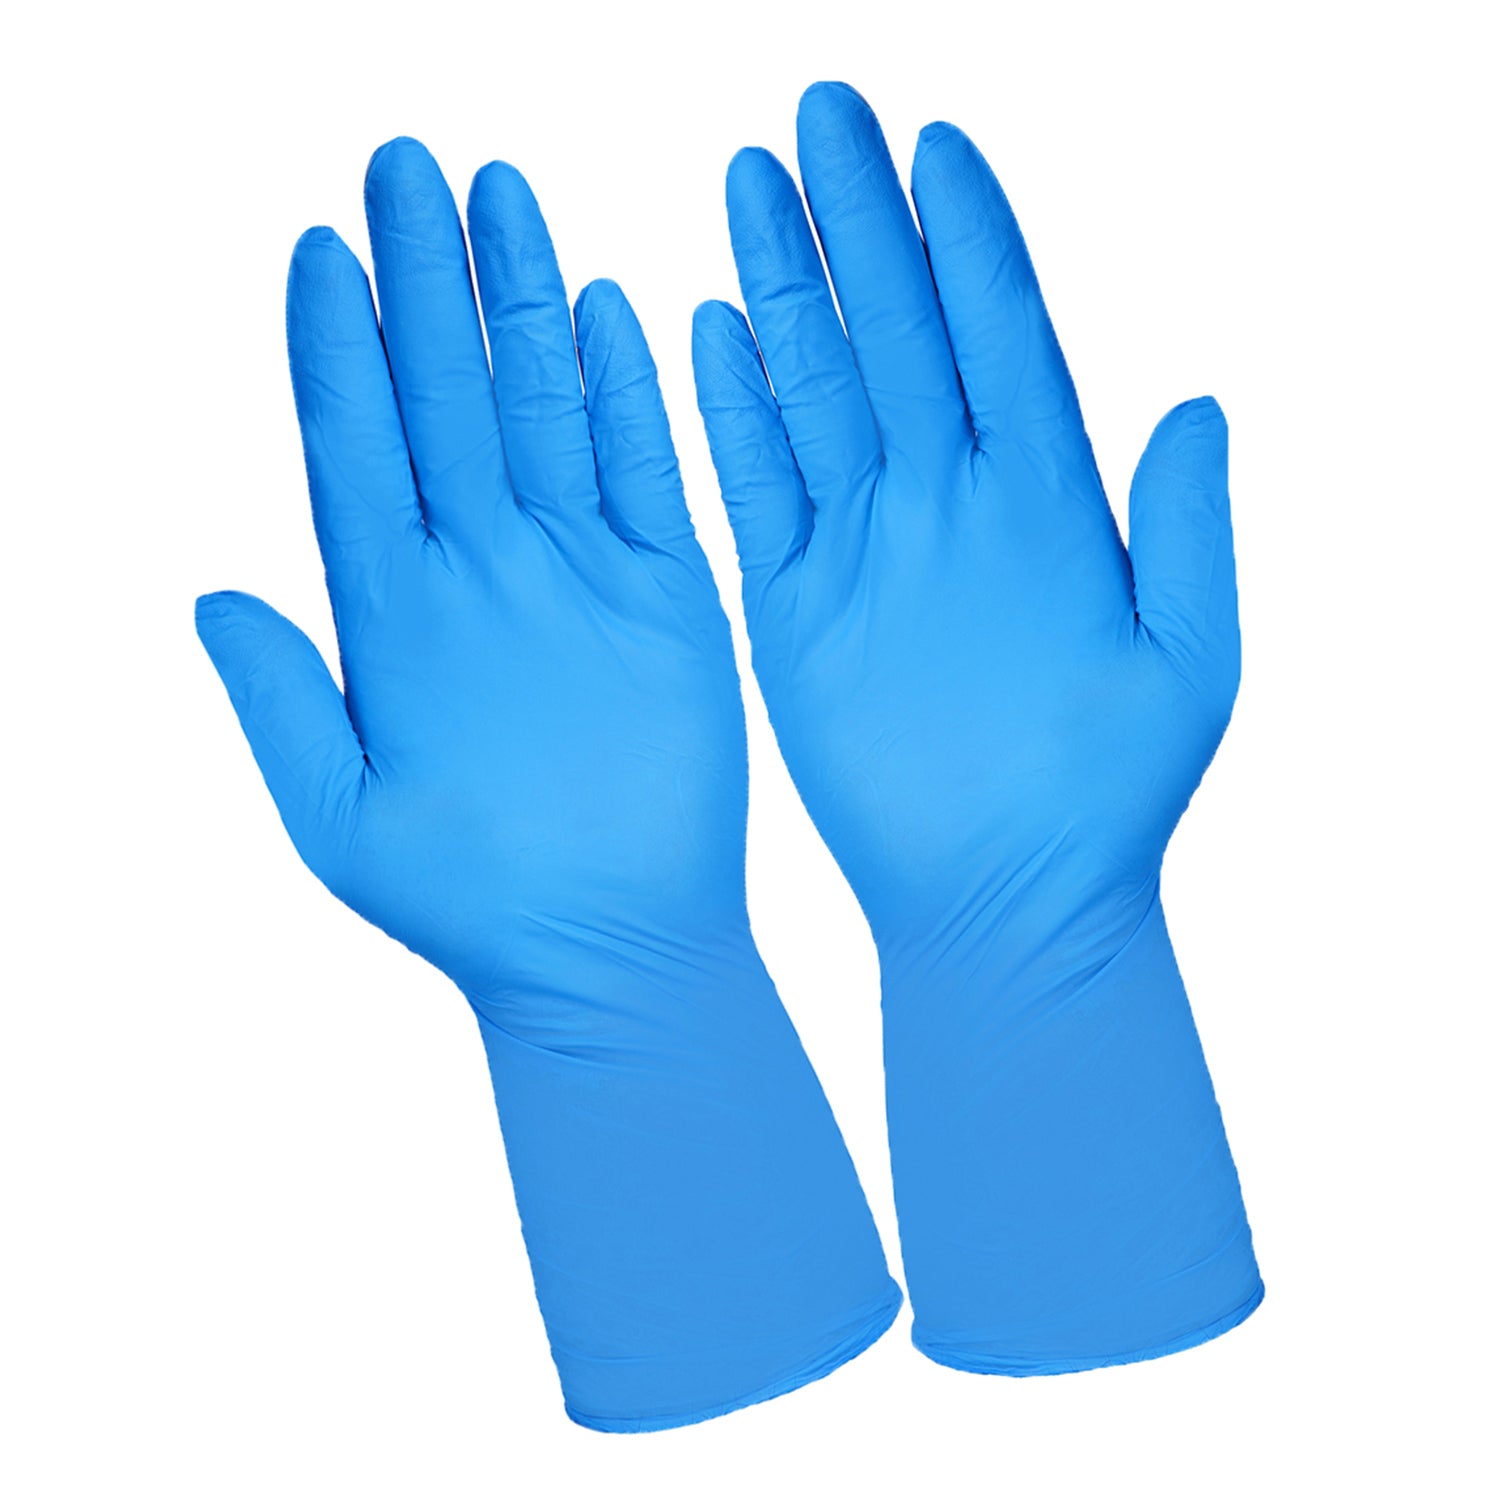 Premier AF Nitrile Examination Gloves | Sterile | Latex Free | XLarge | Pack of 50 Pairs (1)